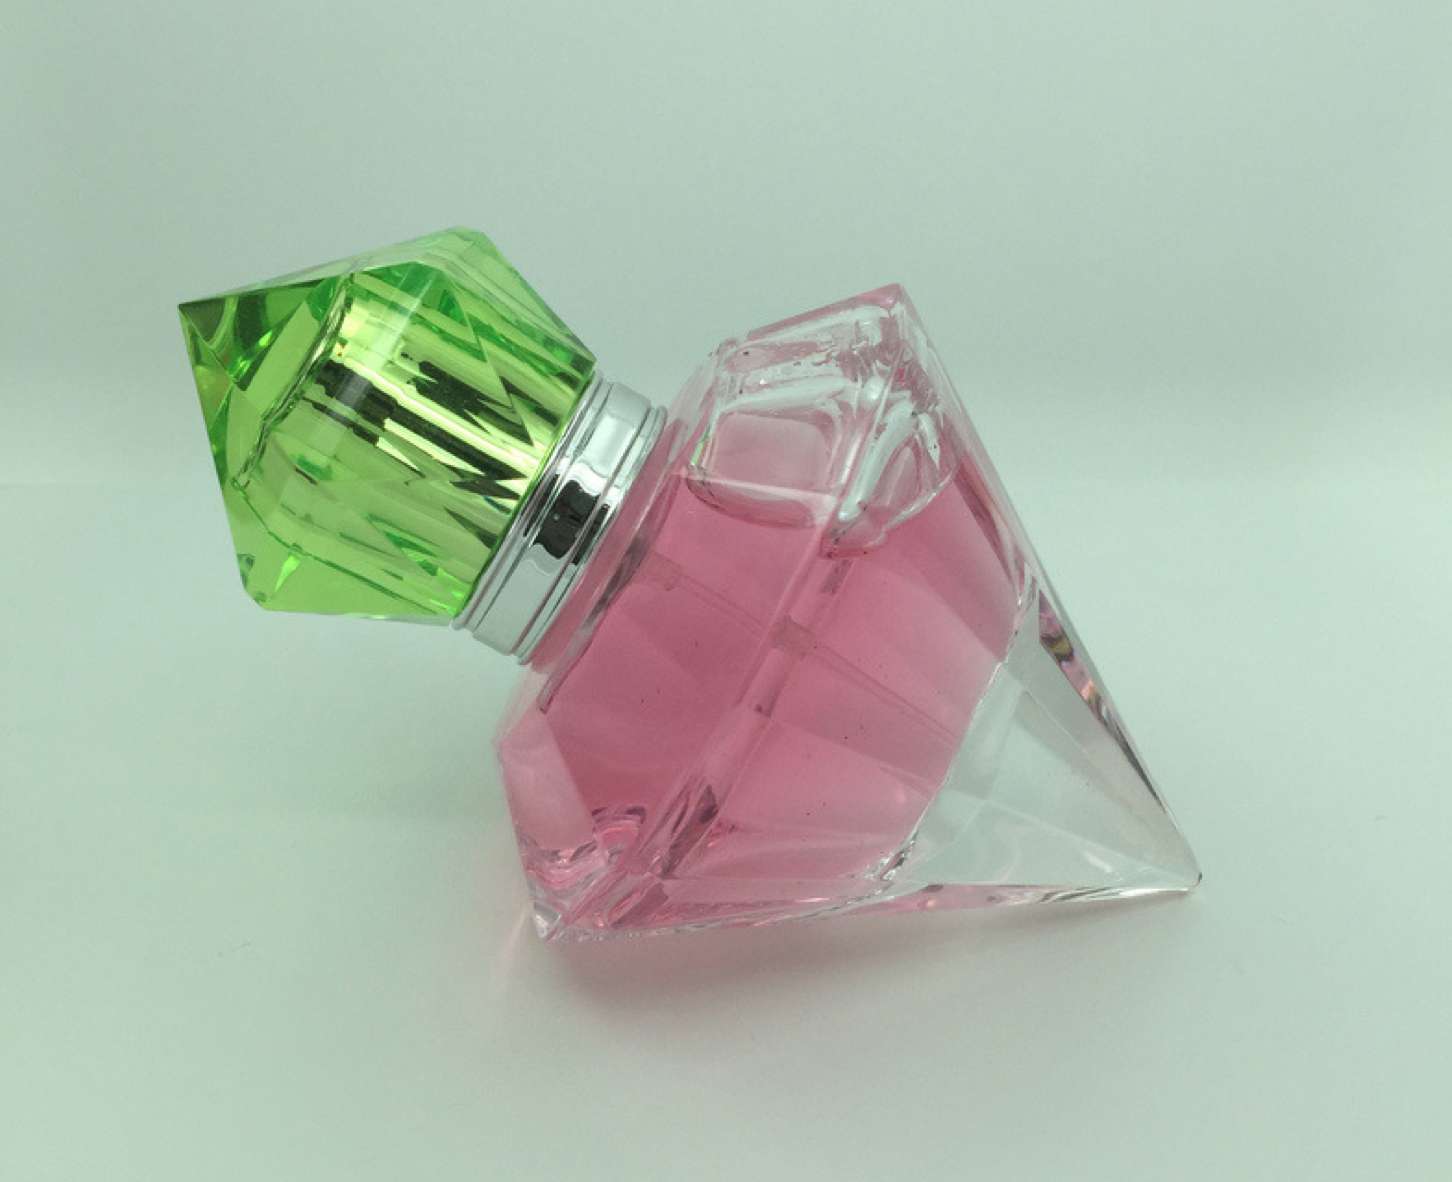 30ml clear diamond shape glass spray perfume bottle with green crown cap. 